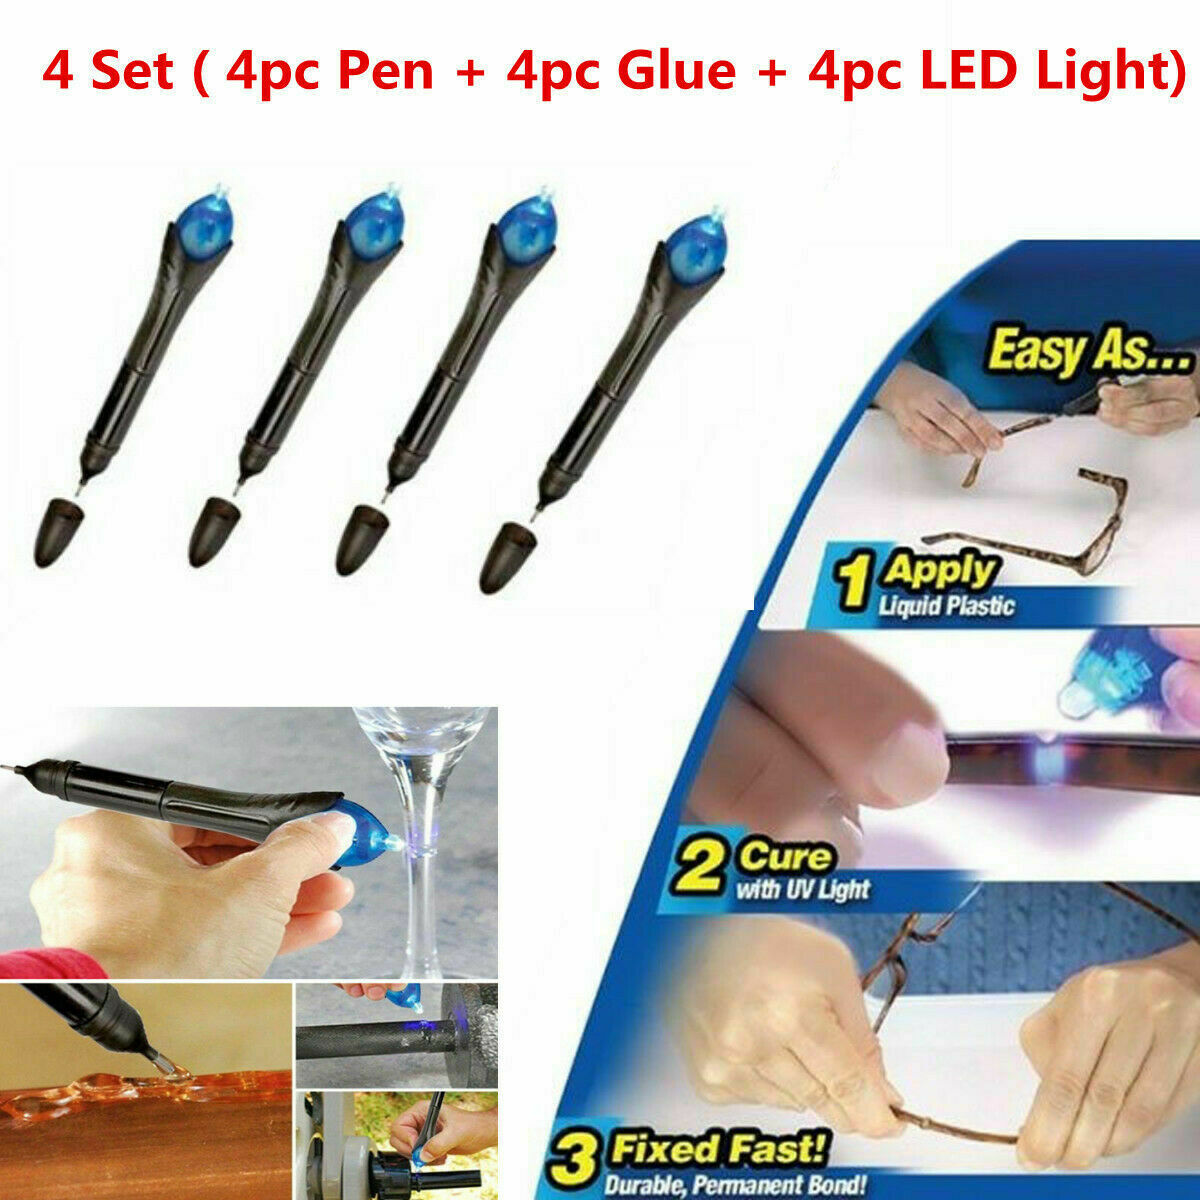 4pcs Quick 5 Second UV Light Fix Liquid Glass Welding Compound Repair Pen Glue L